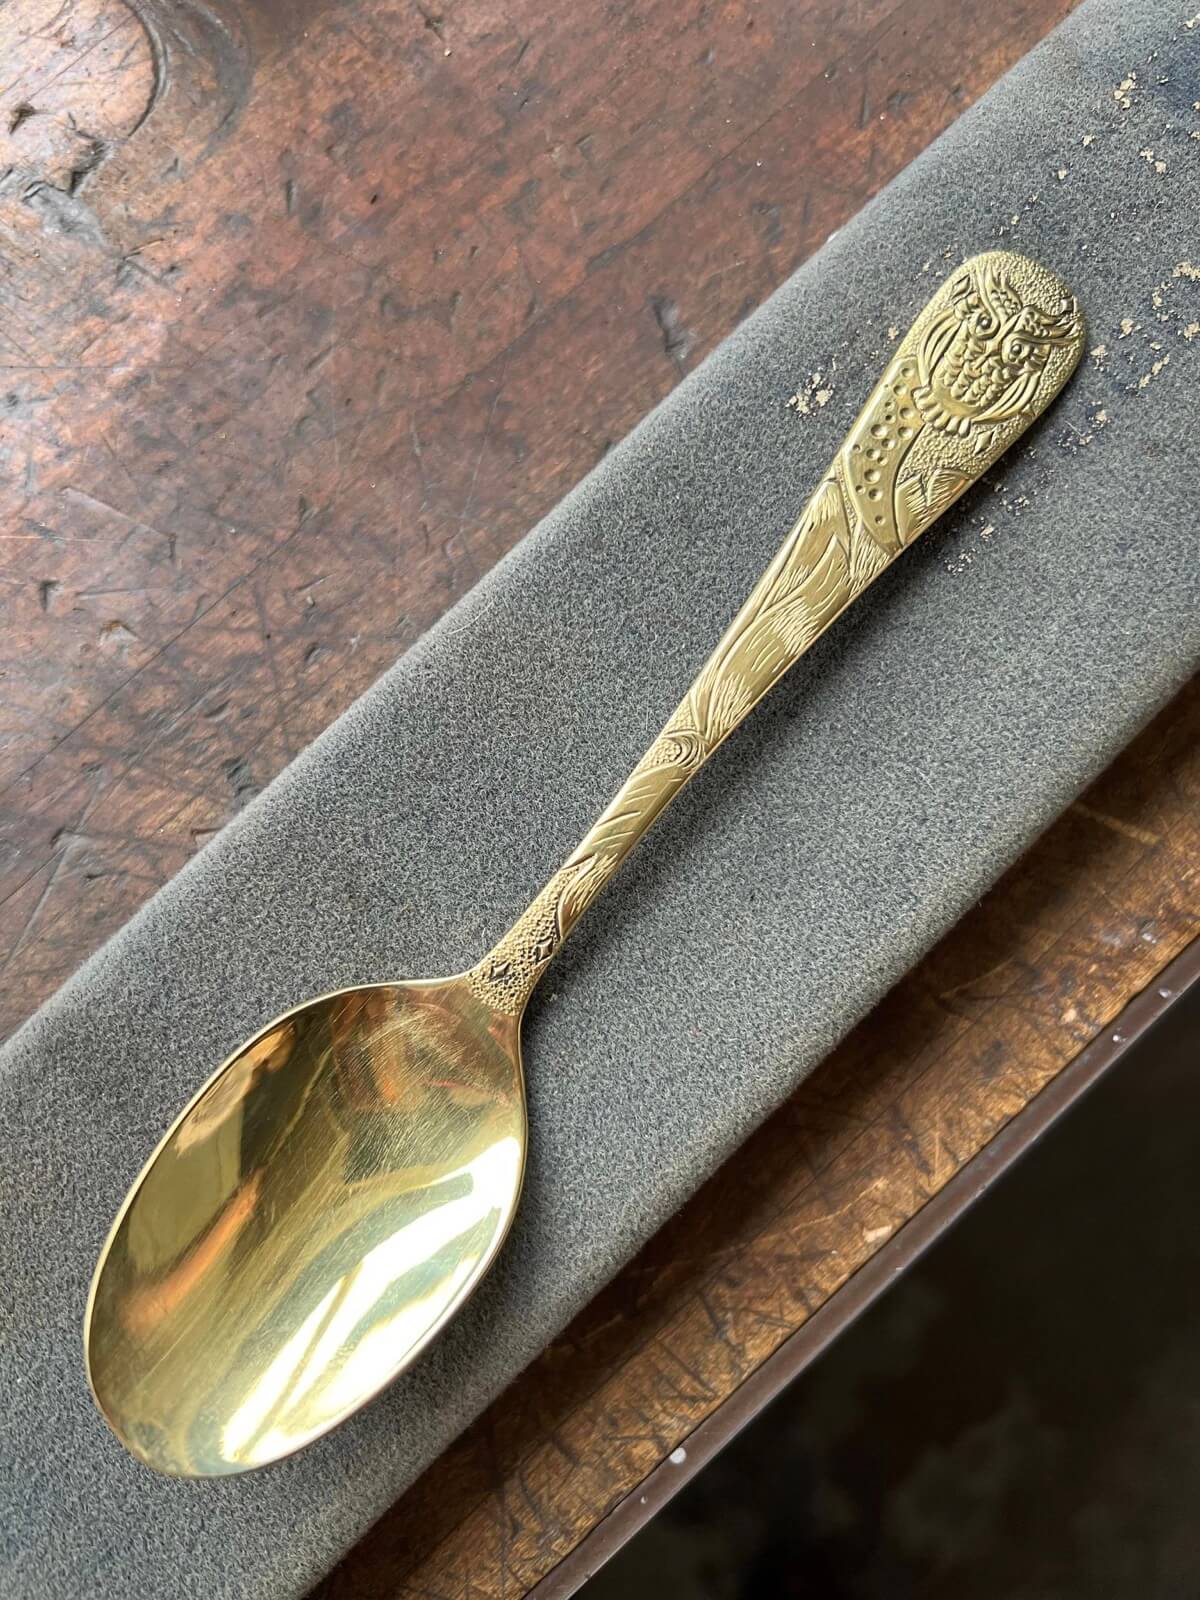 Conceptual Owl design brass spoon prototype